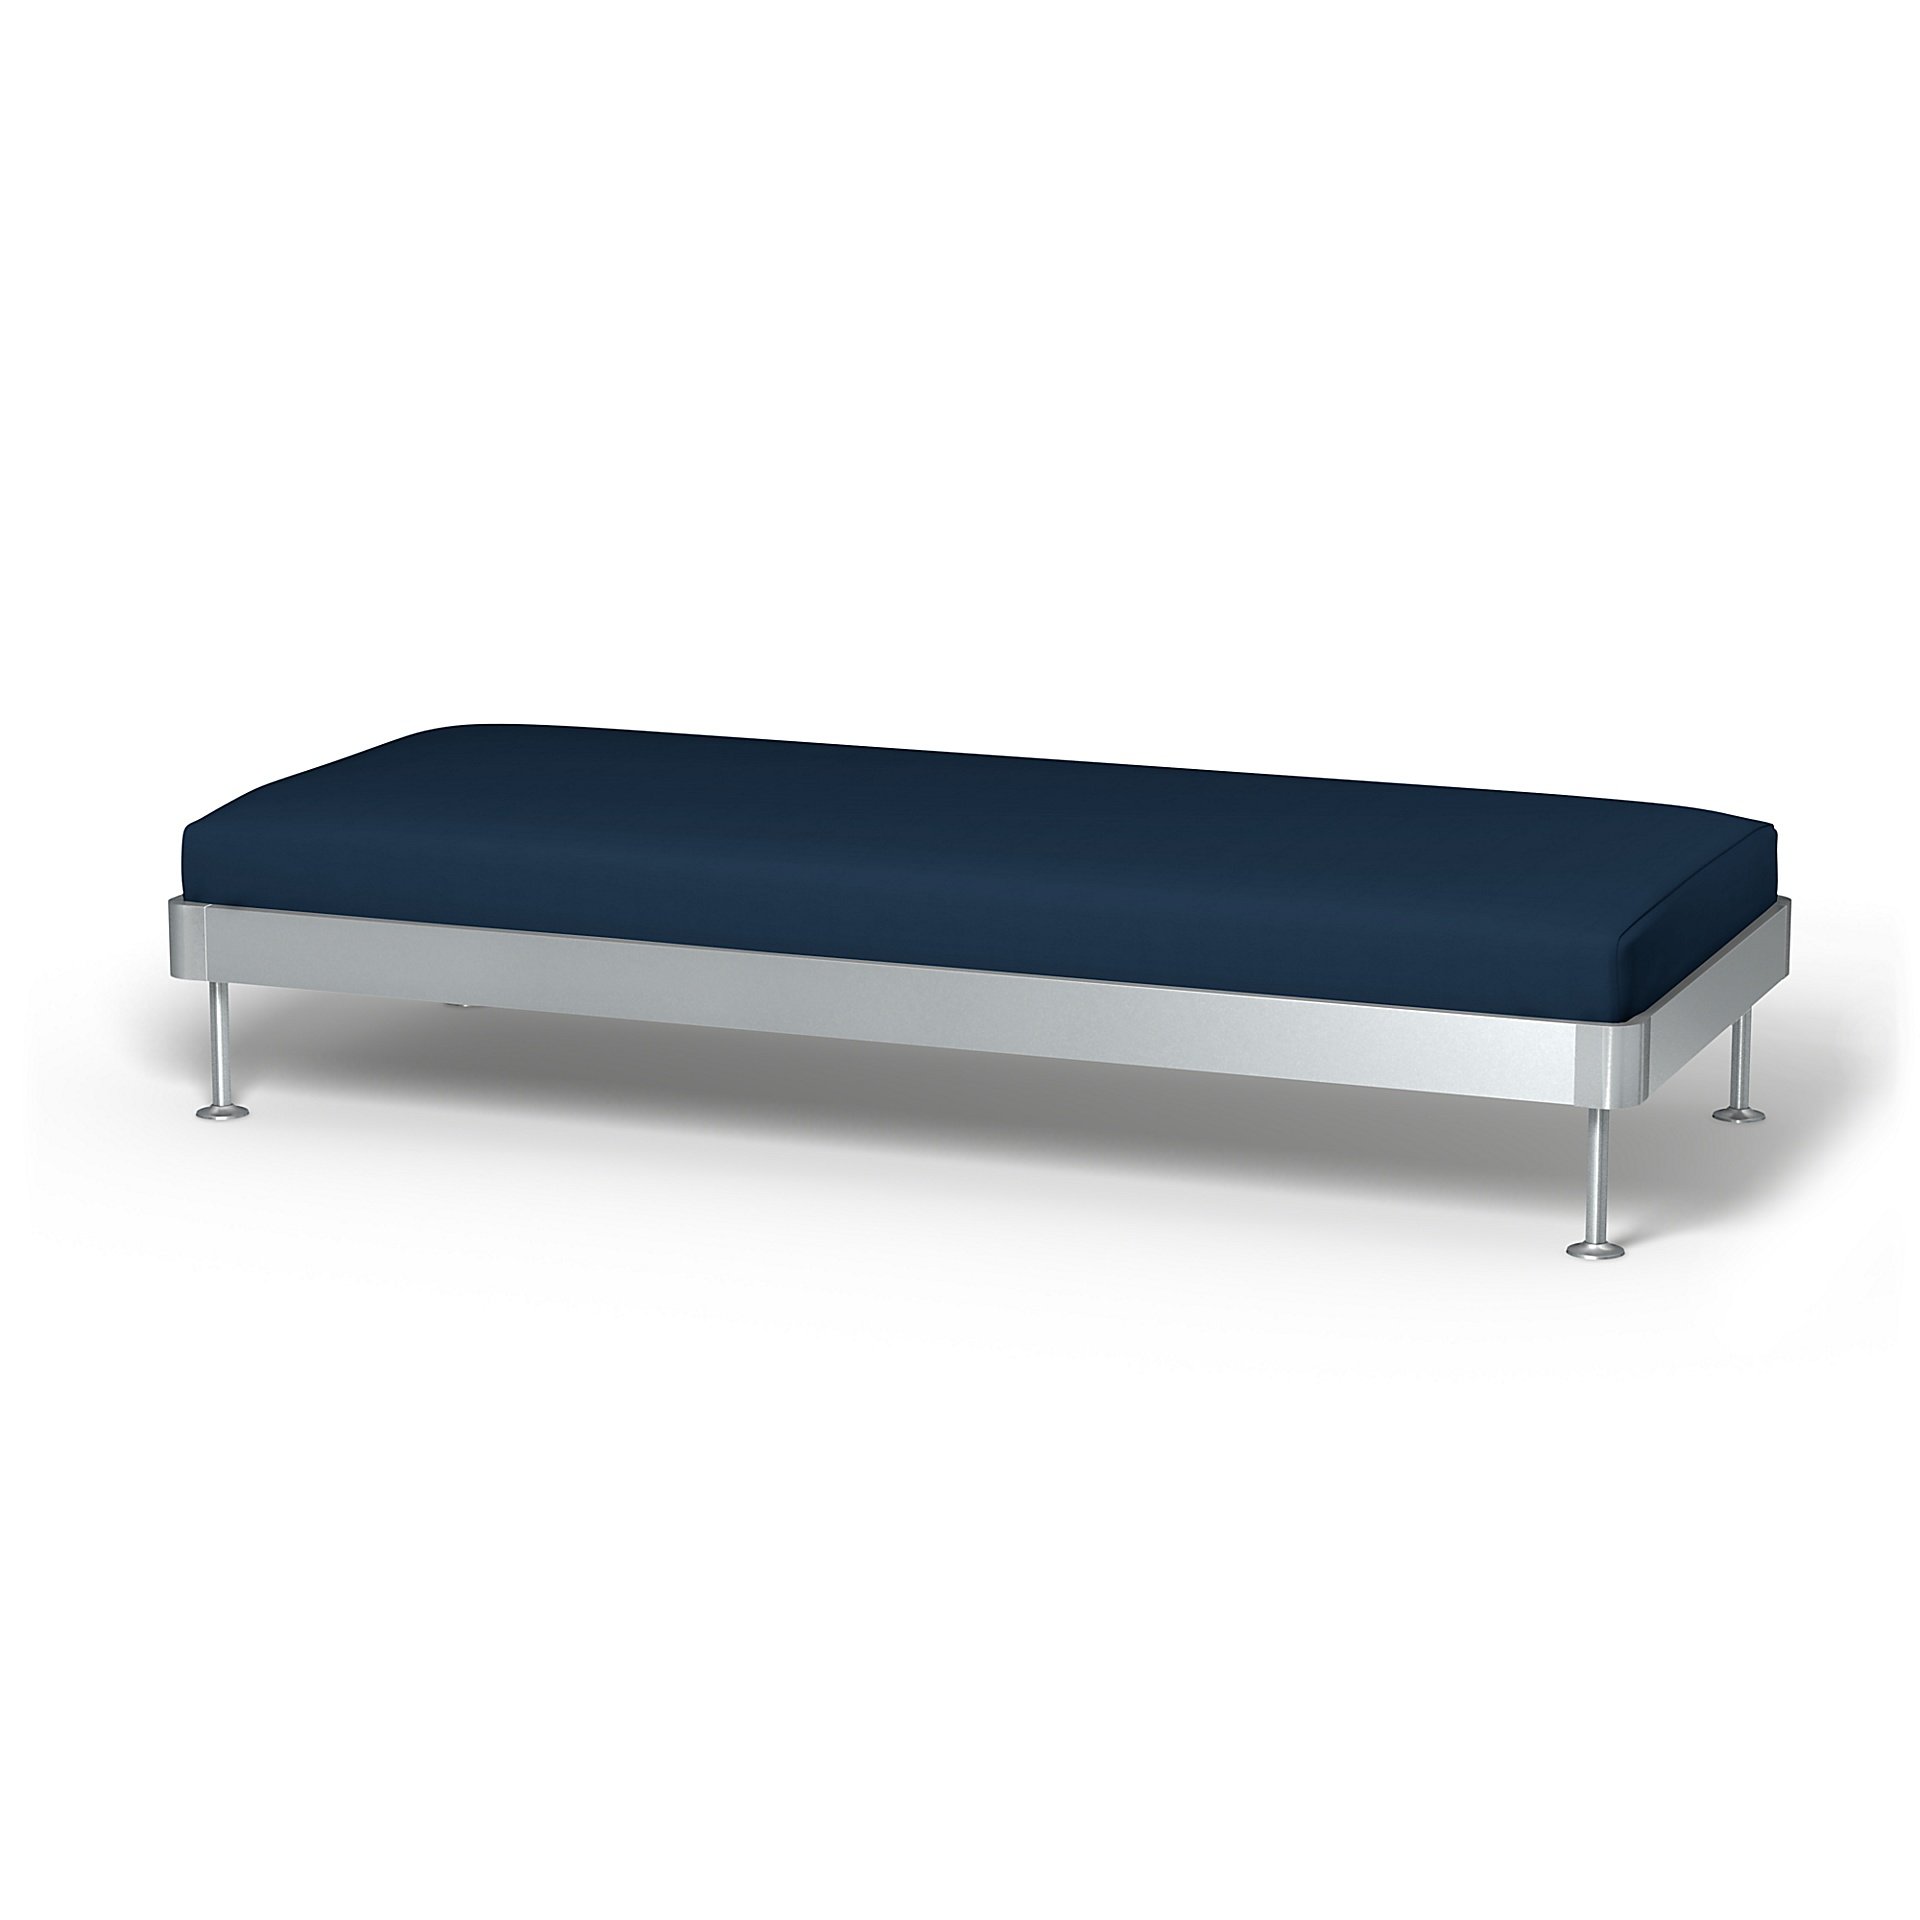 IKEA - Delaktig 3 Seat Platform Cover, Deep Navy Blue, Cotton - Bemz